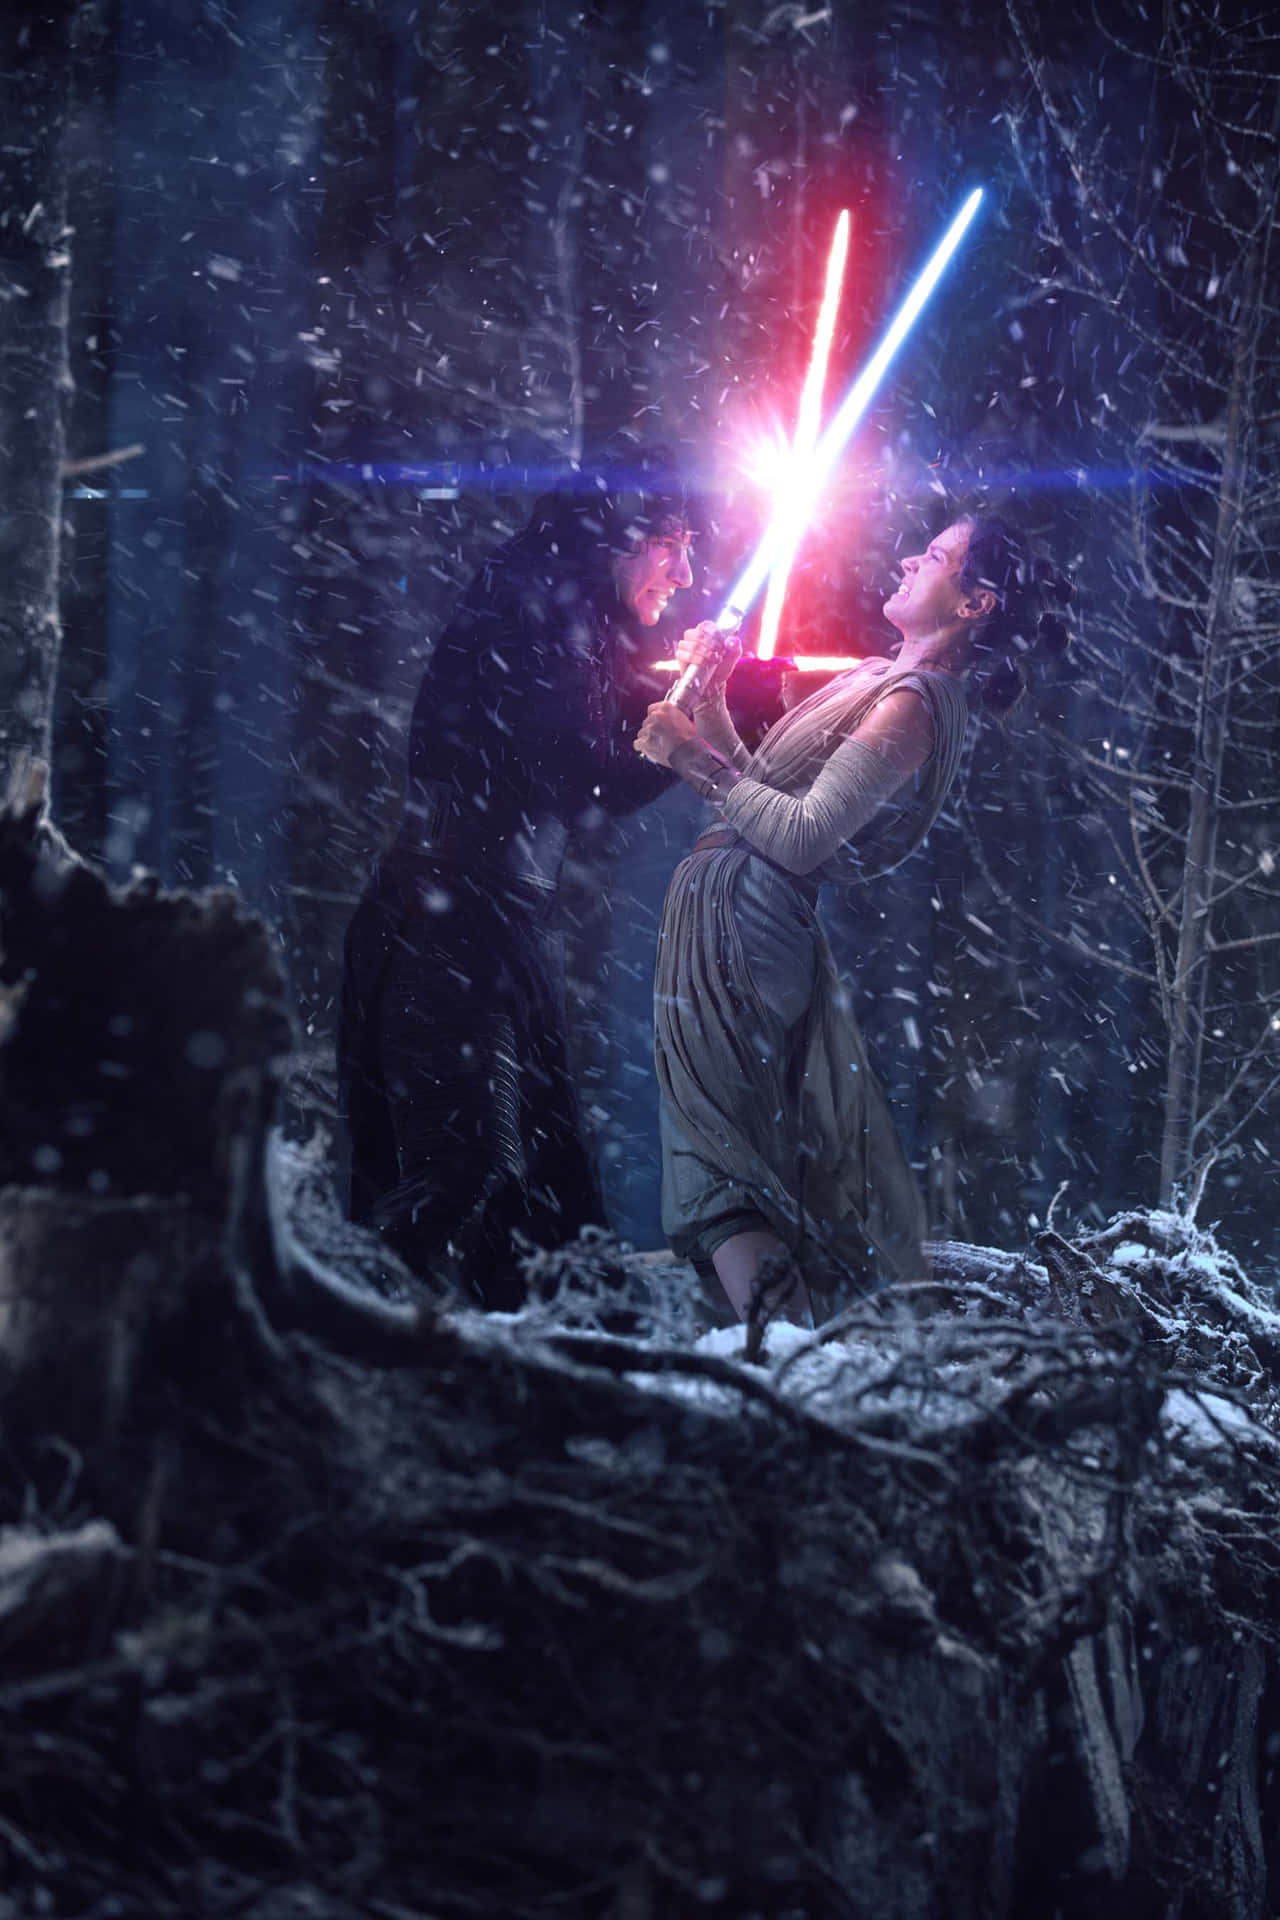 Star Wars Rey And Kylo Ren Lightsaber Battle Picture